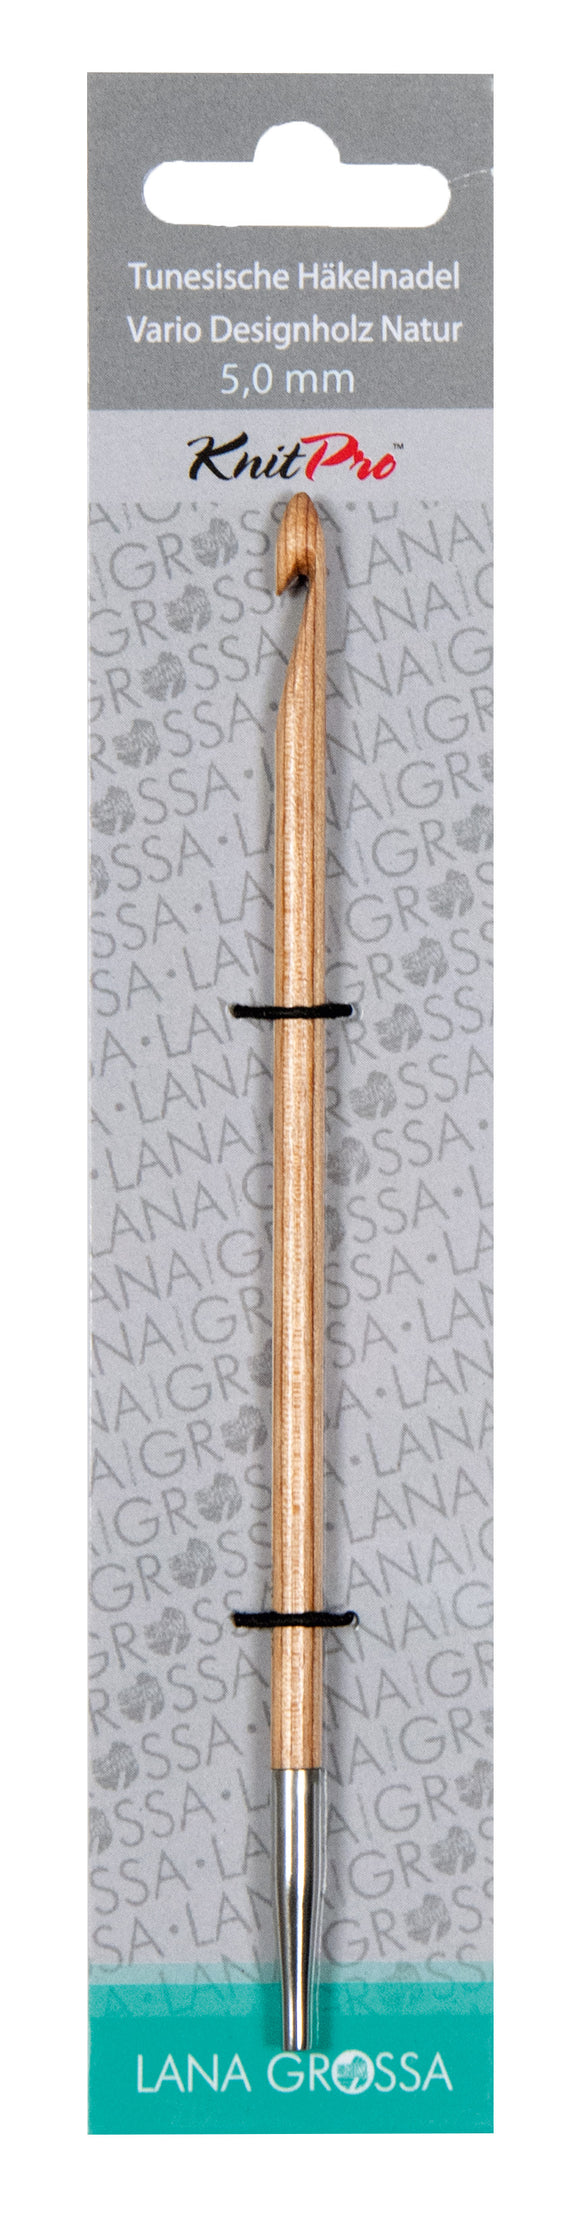 Lana Grossa tunesische Häkelnadel Vario 6,5mm